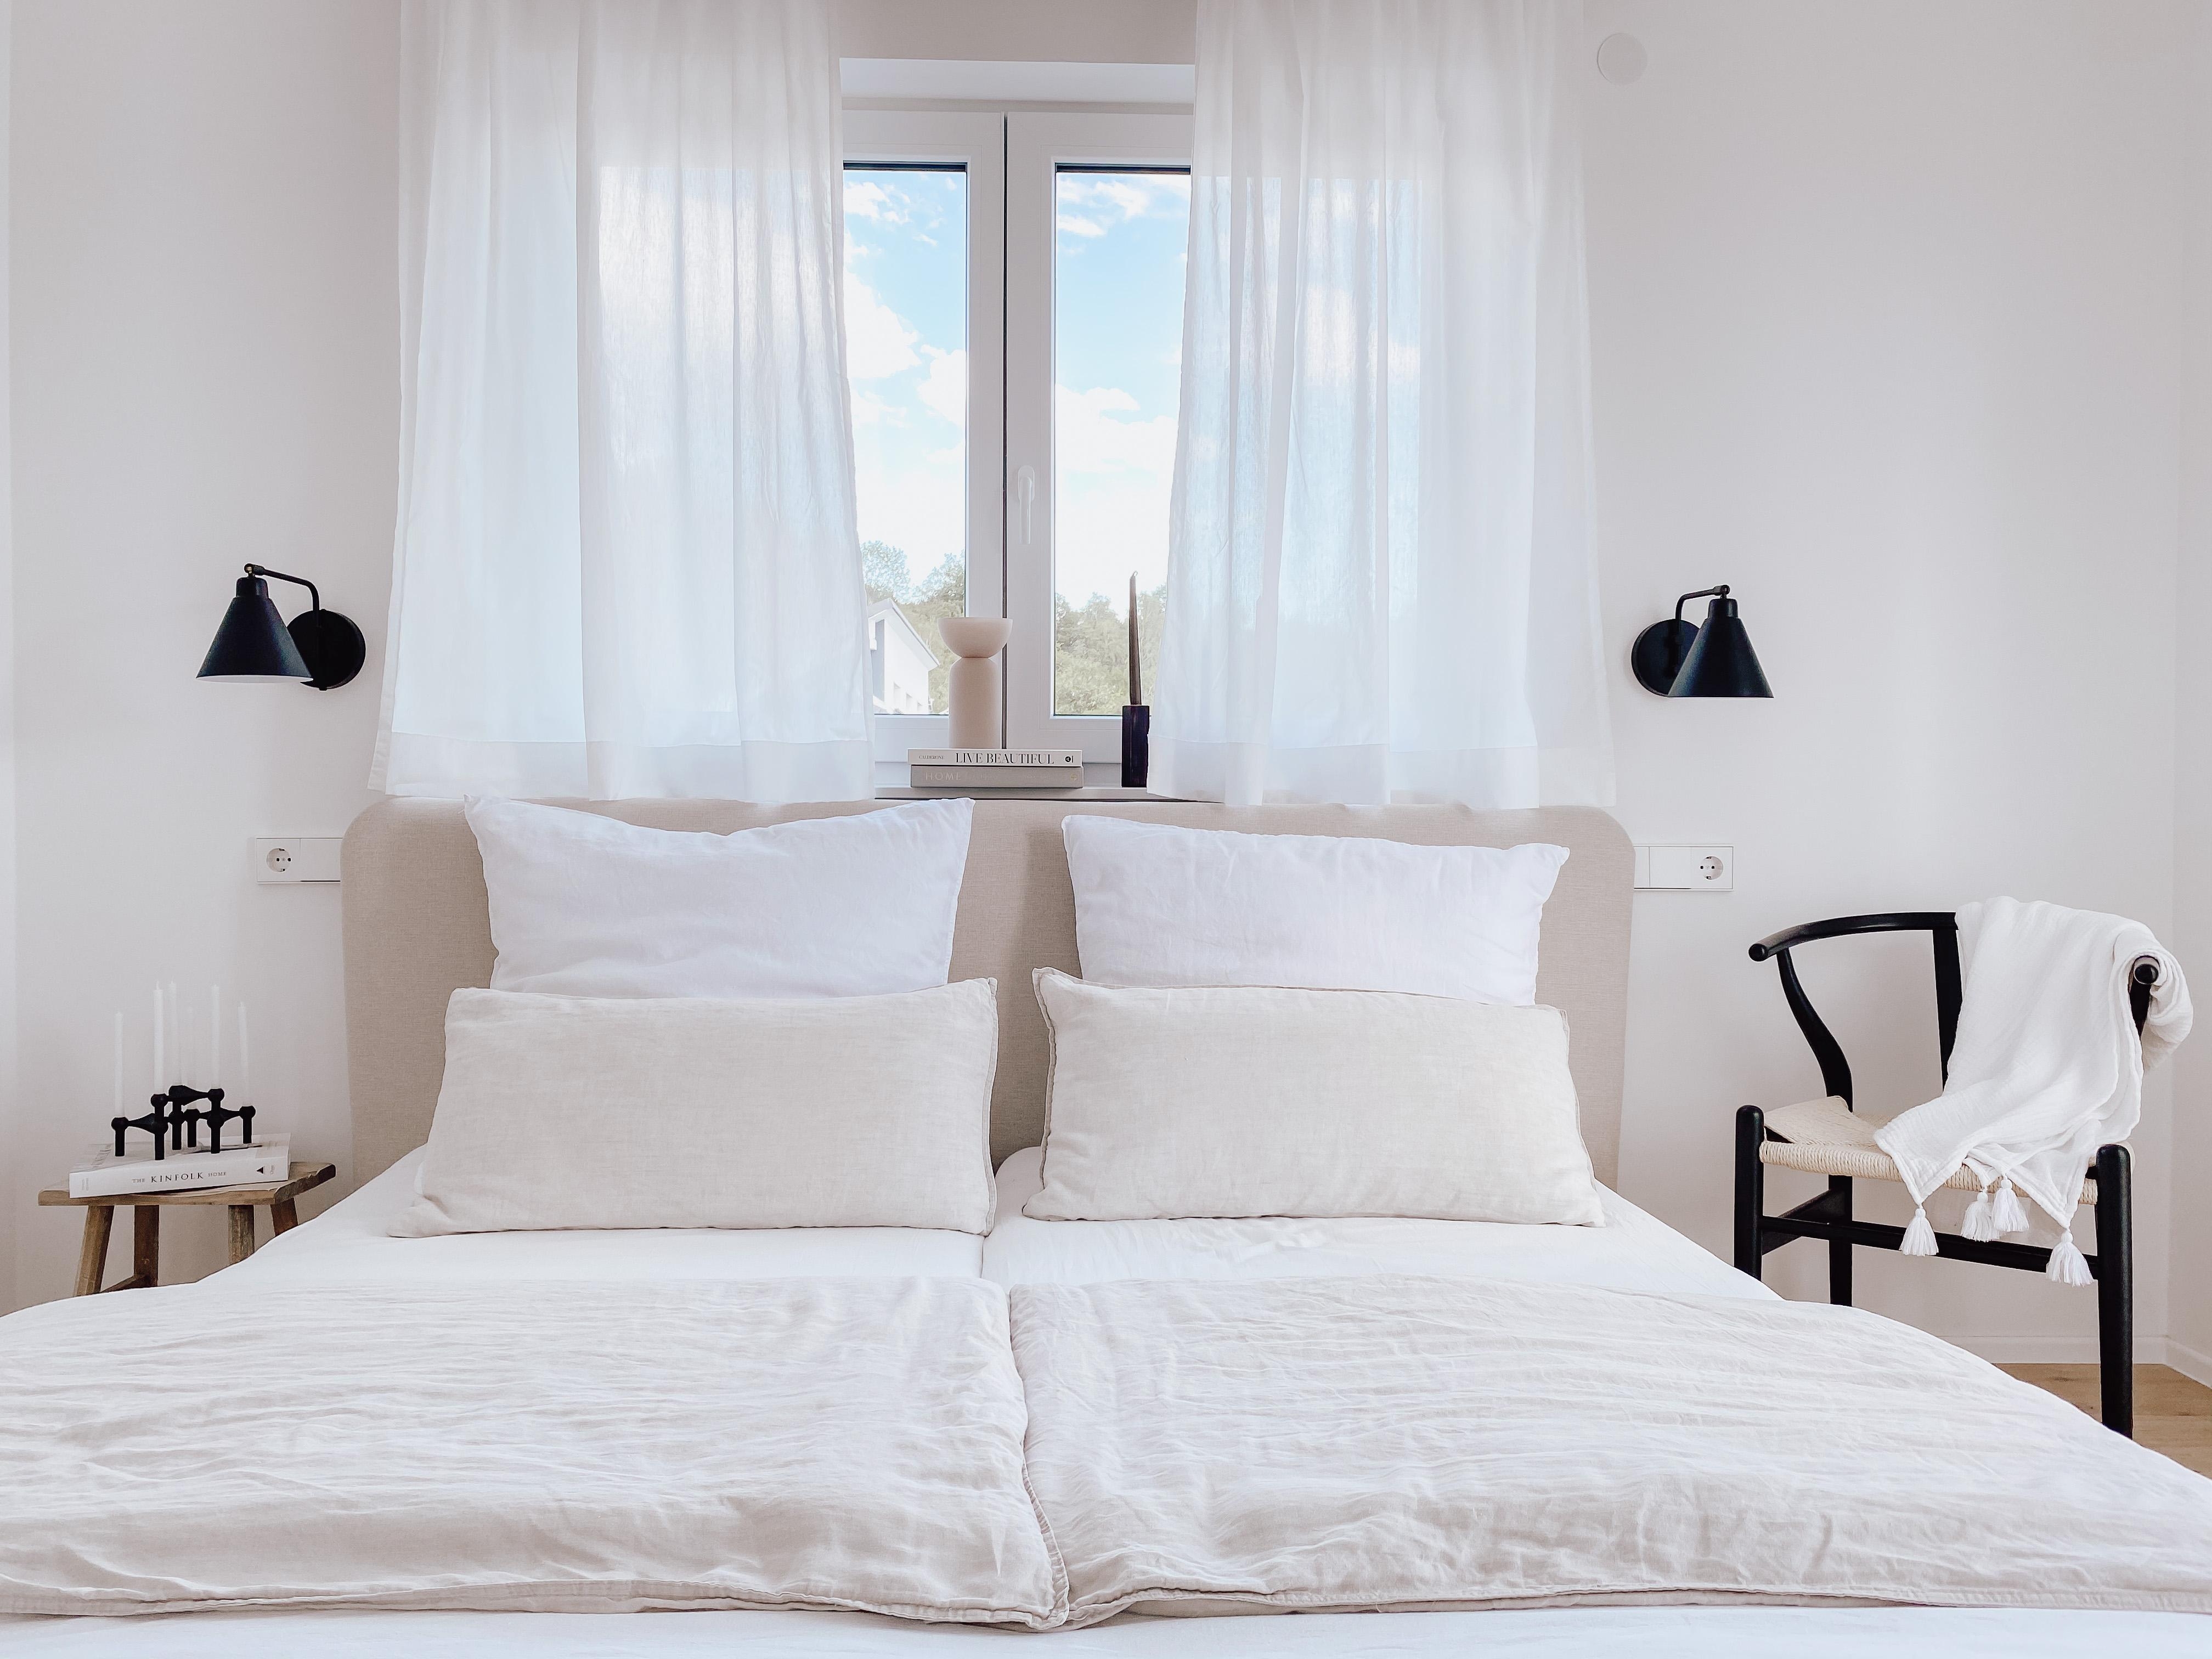 Unser Lieblingsplatz #bedroom #bedroominspo #schlafzimmer #interior #interiorinspiration 